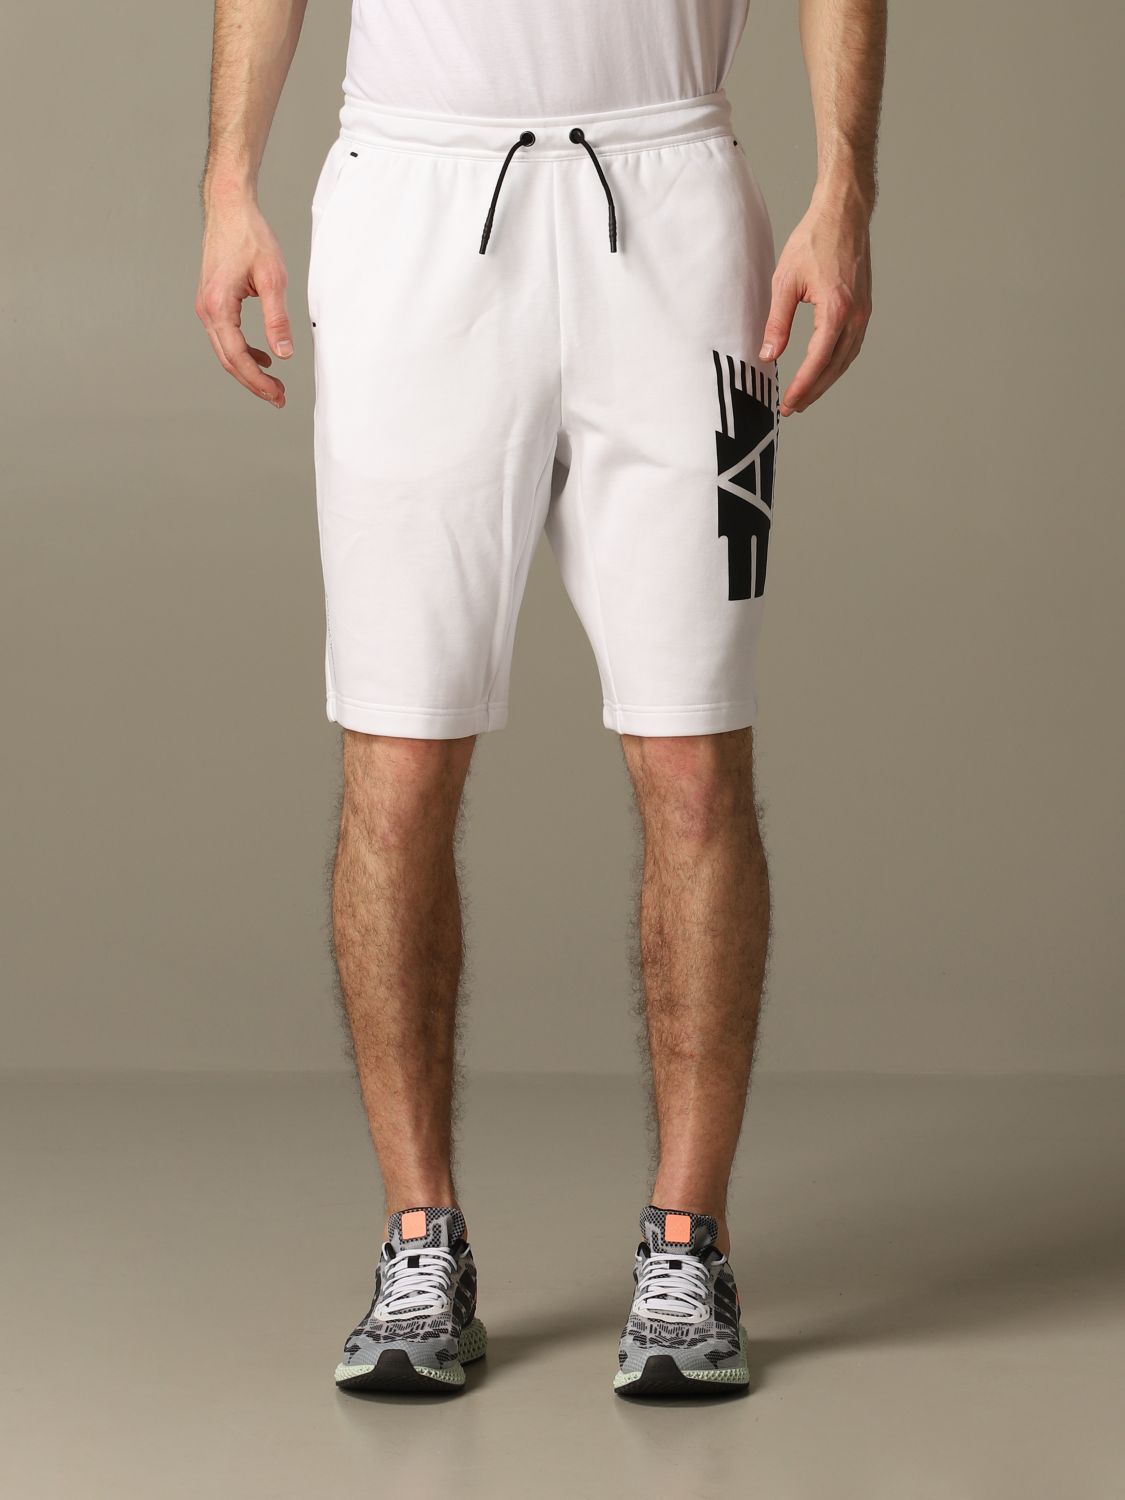 ea7 white shorts